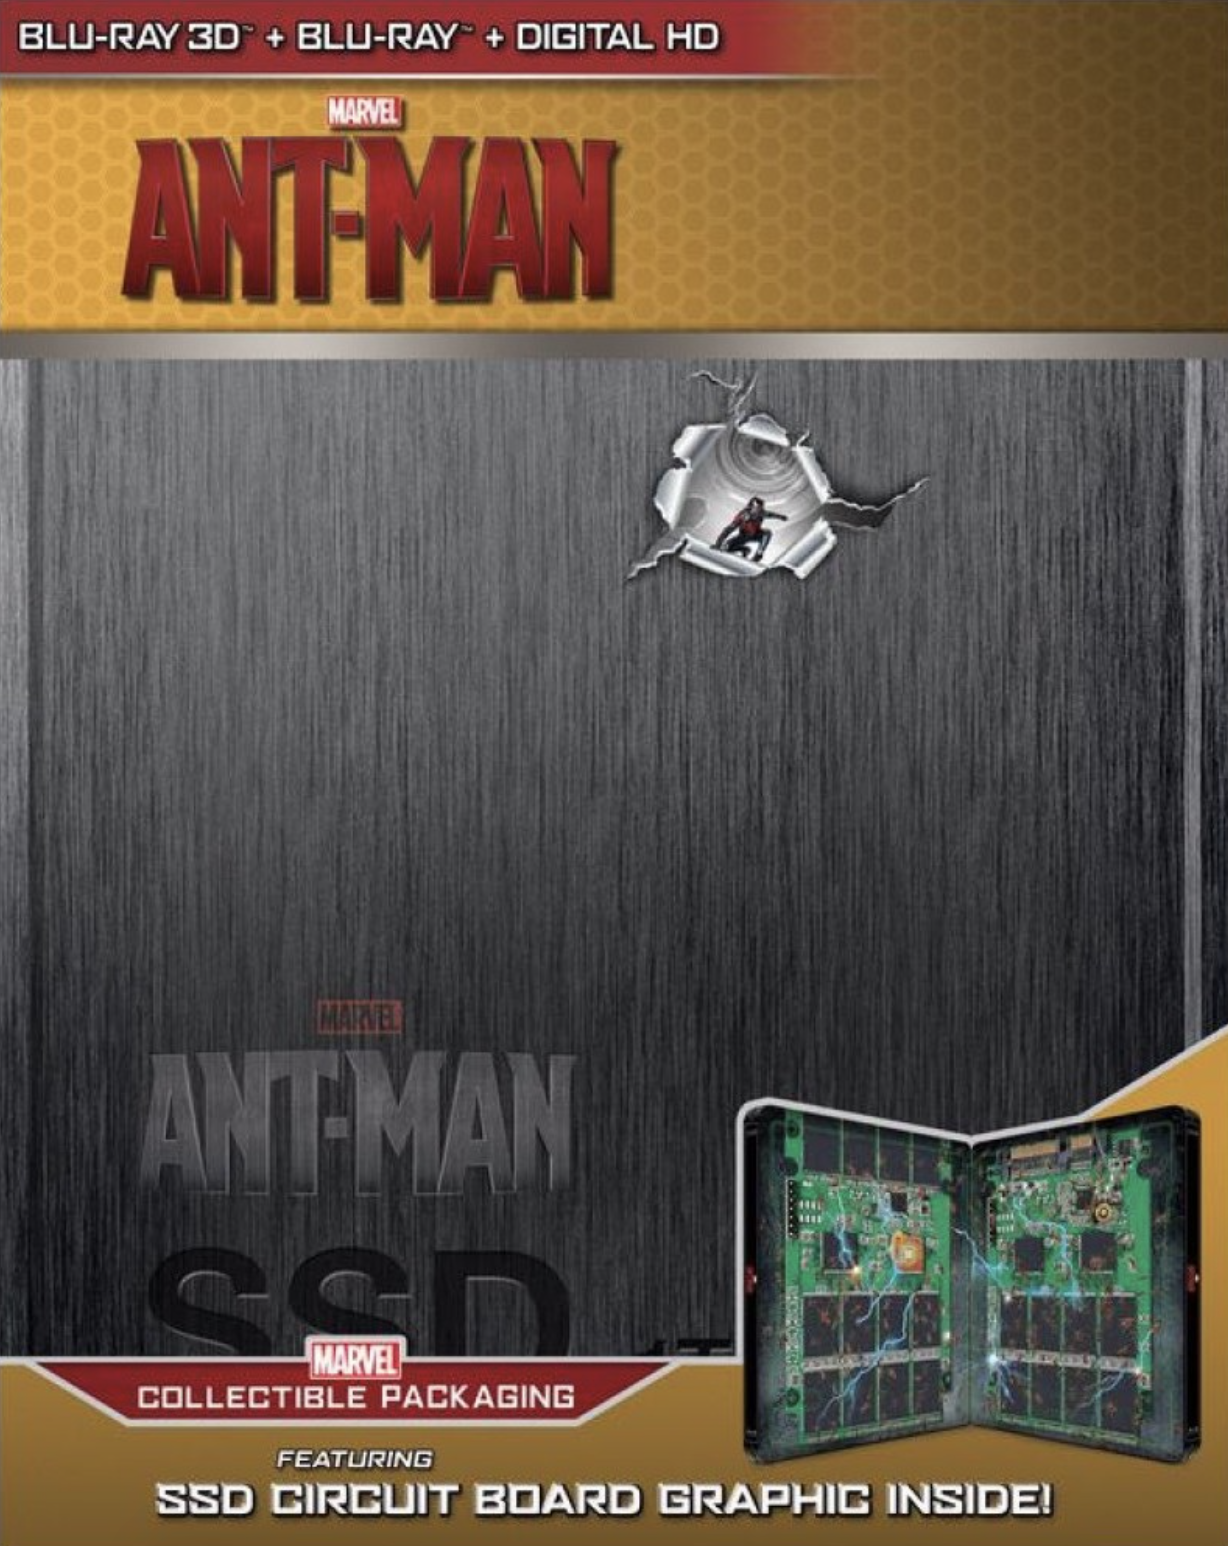 Marvel's Ant-man (dvd) : Target